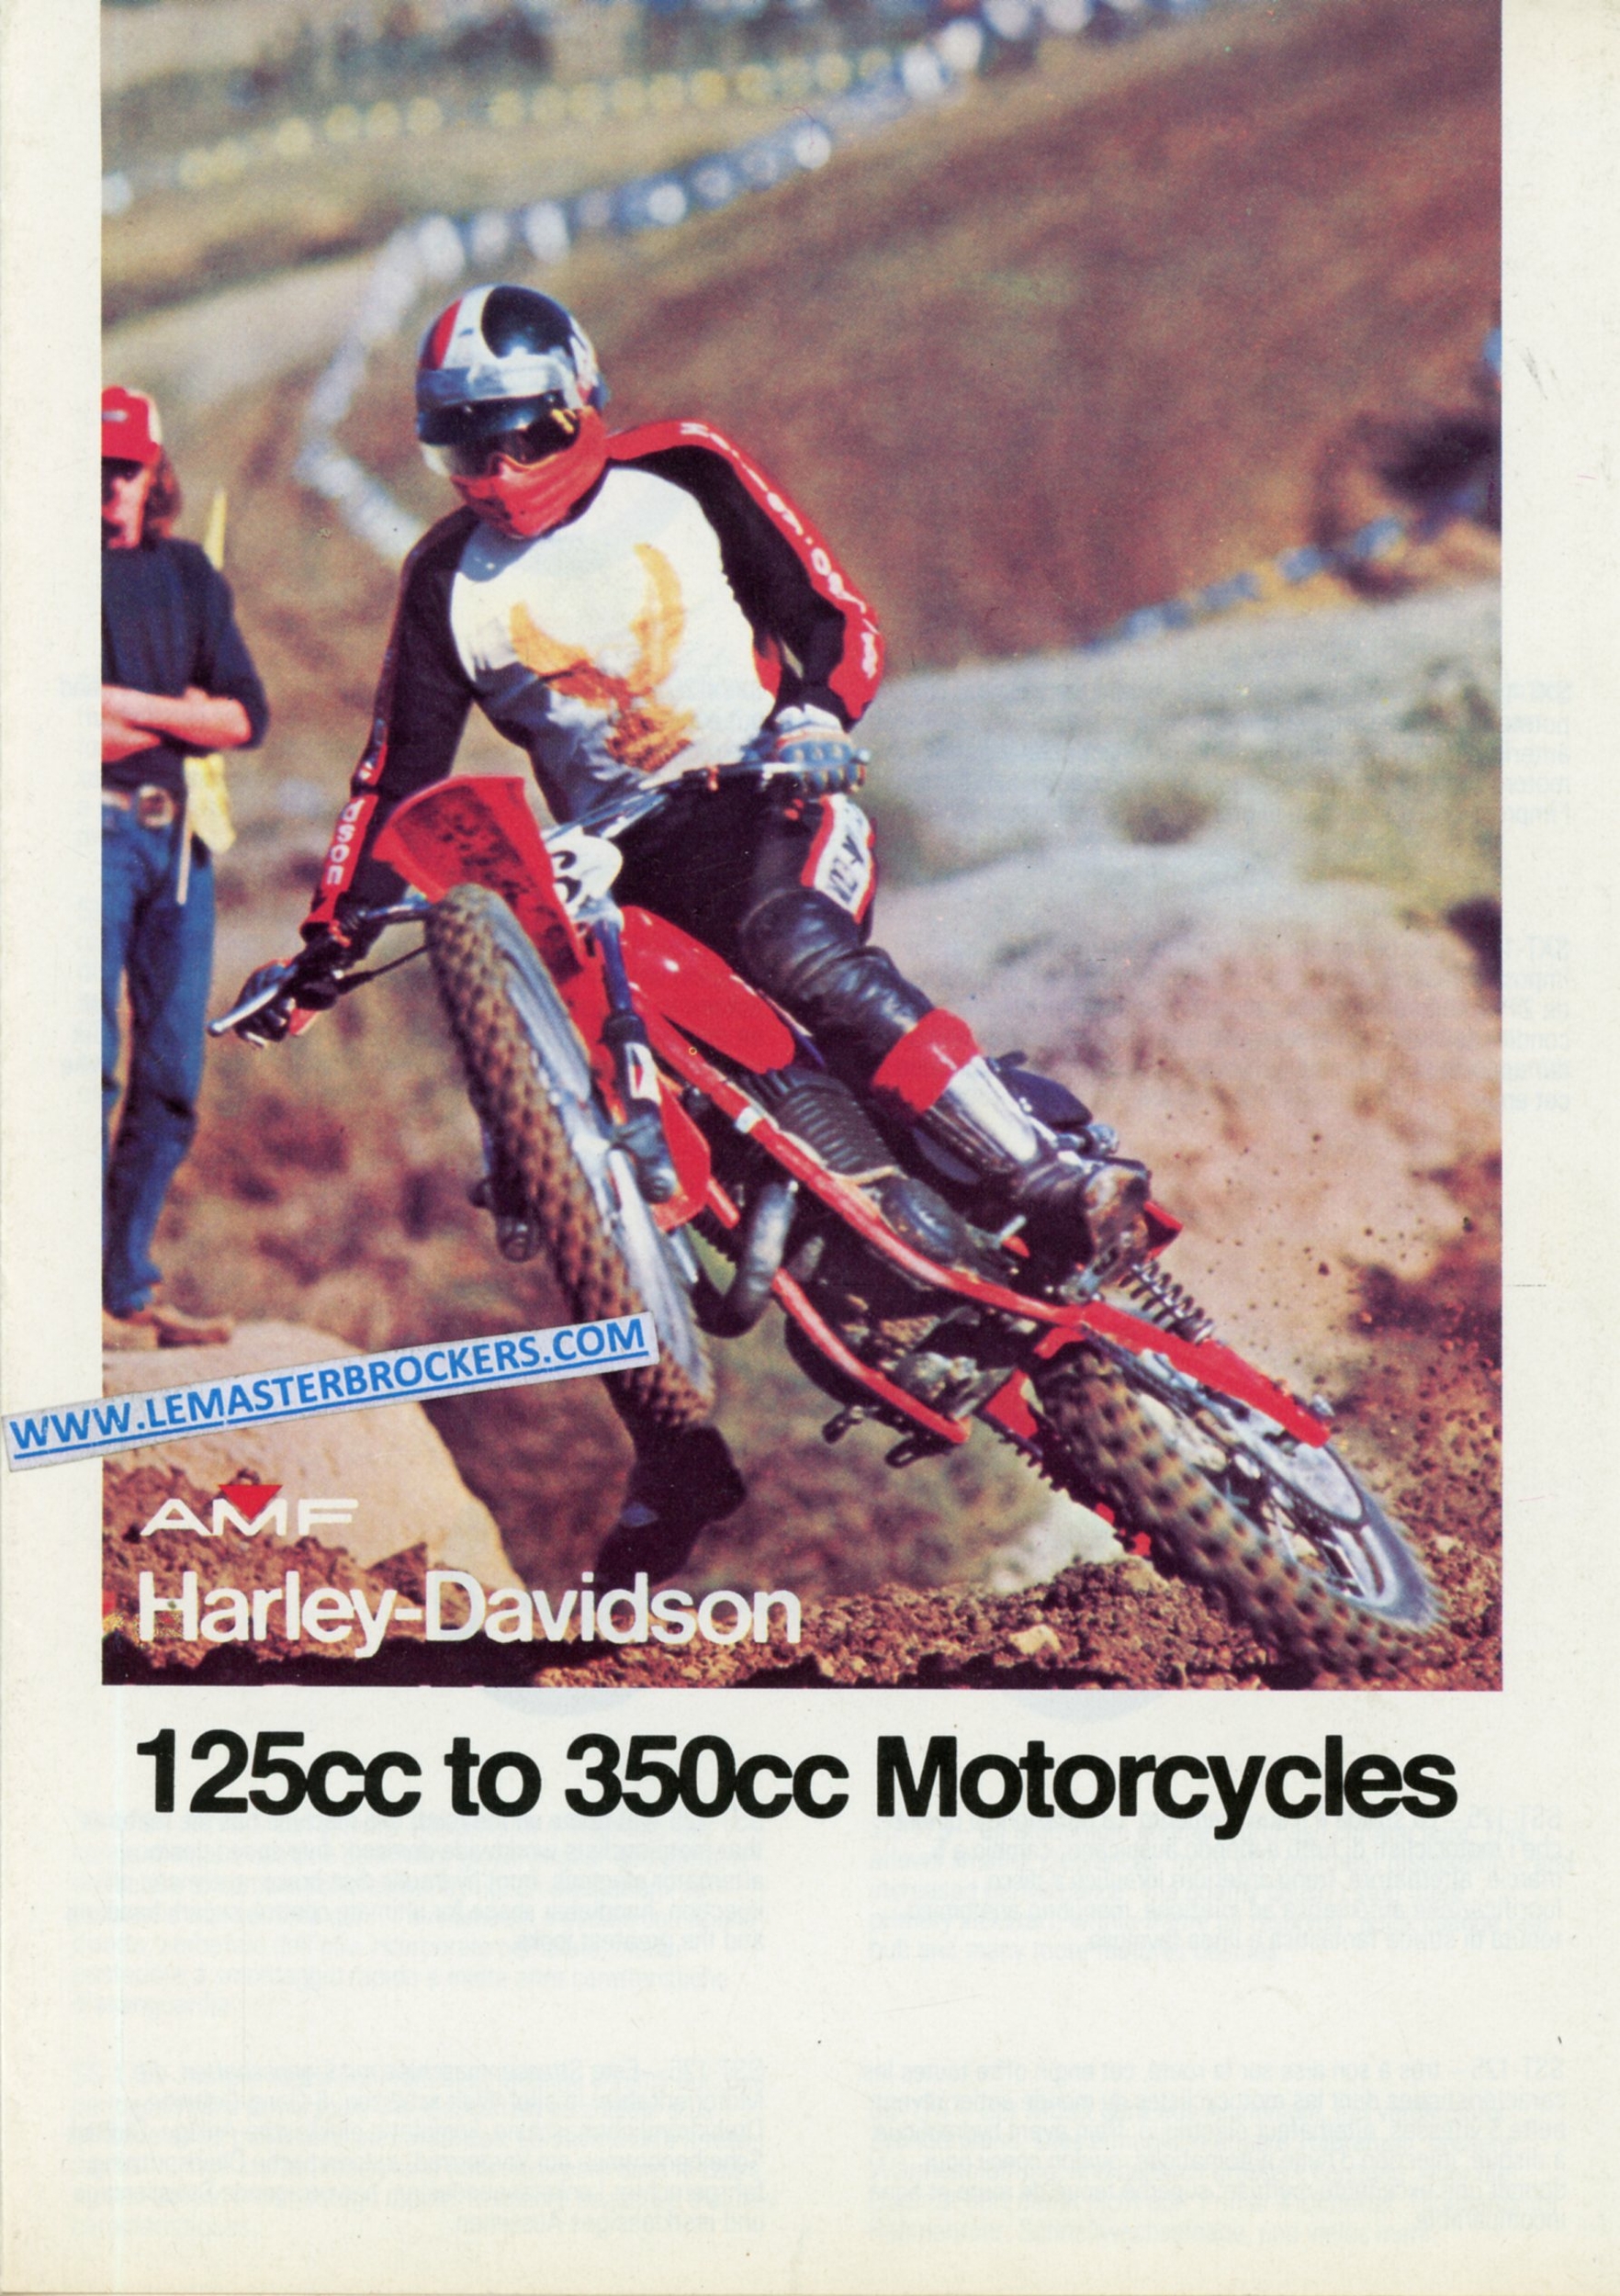 AMF HARLEY DAVIDSON 125cc TO 350cc MOTORCYCLES